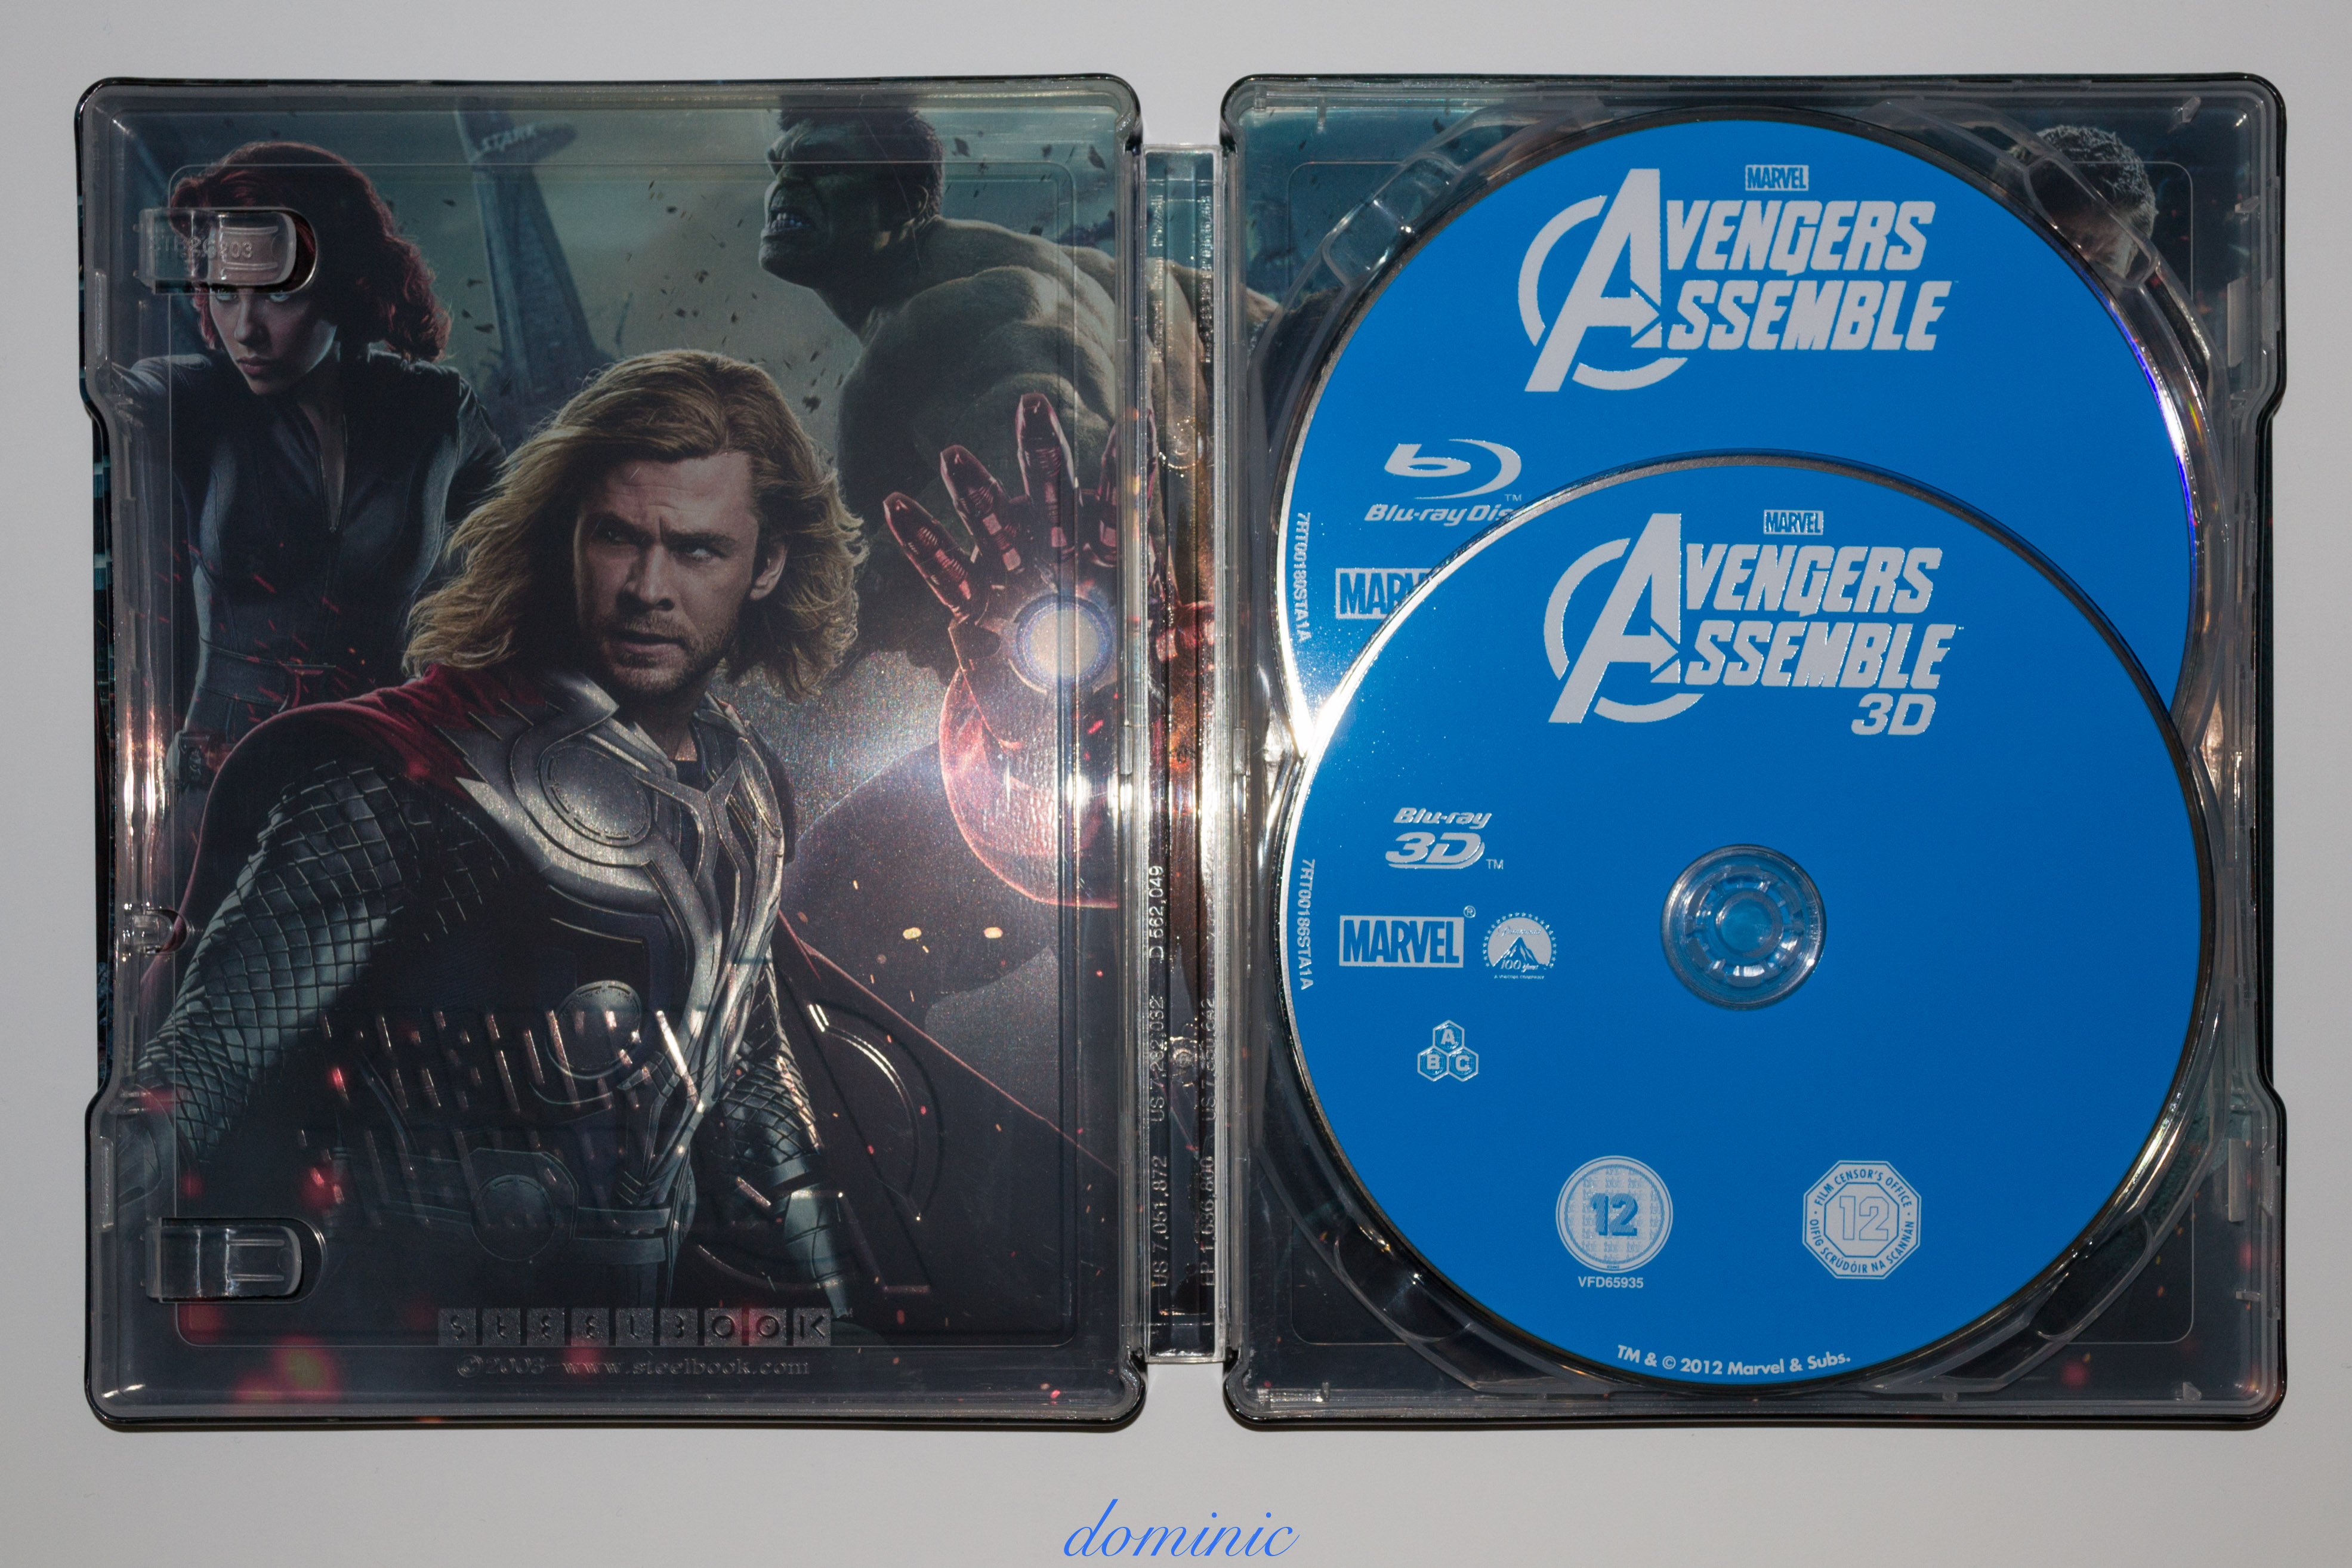 Avengers Aseemble - Inside with discs.jpg